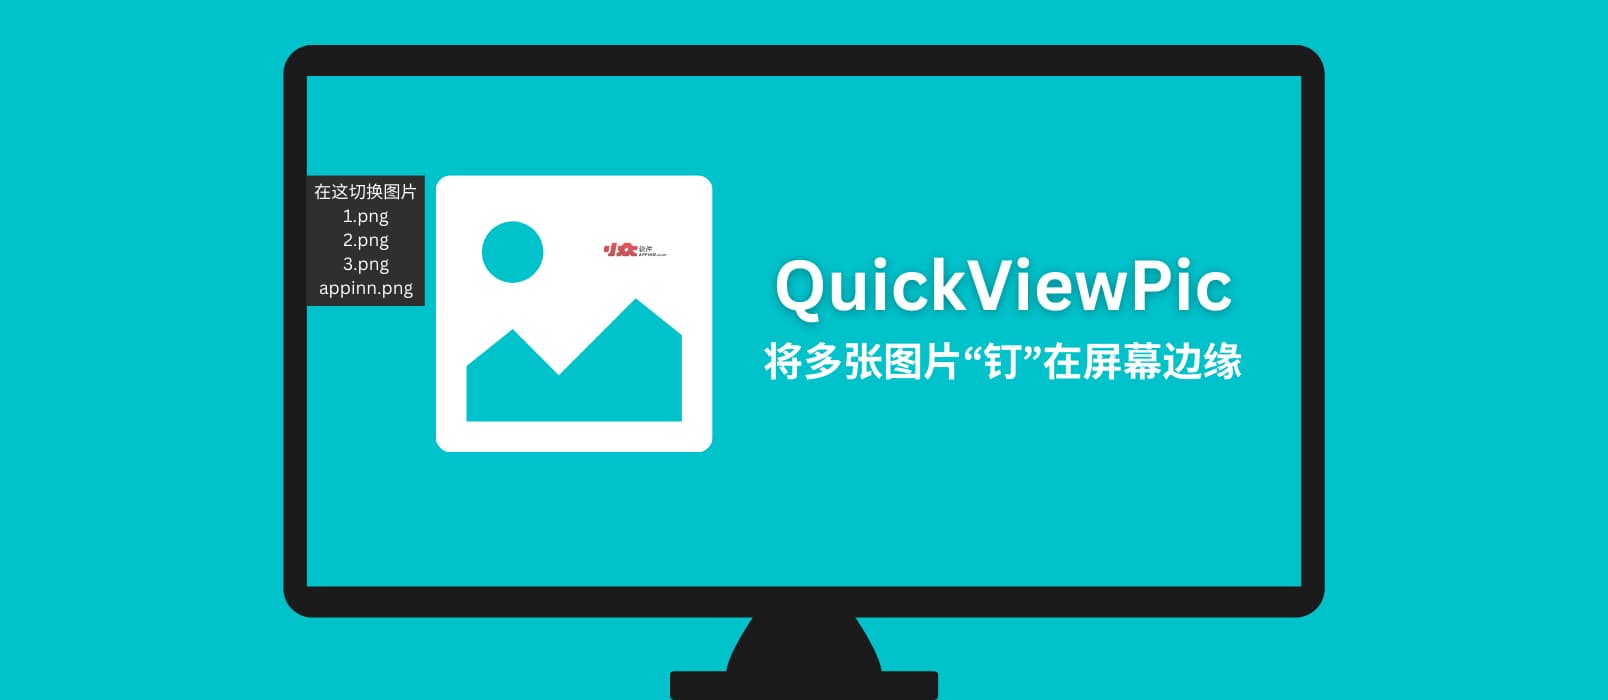 QuickViewPic - 将多张图片“钉”在屏幕边缘，快速切换查看[Windows]